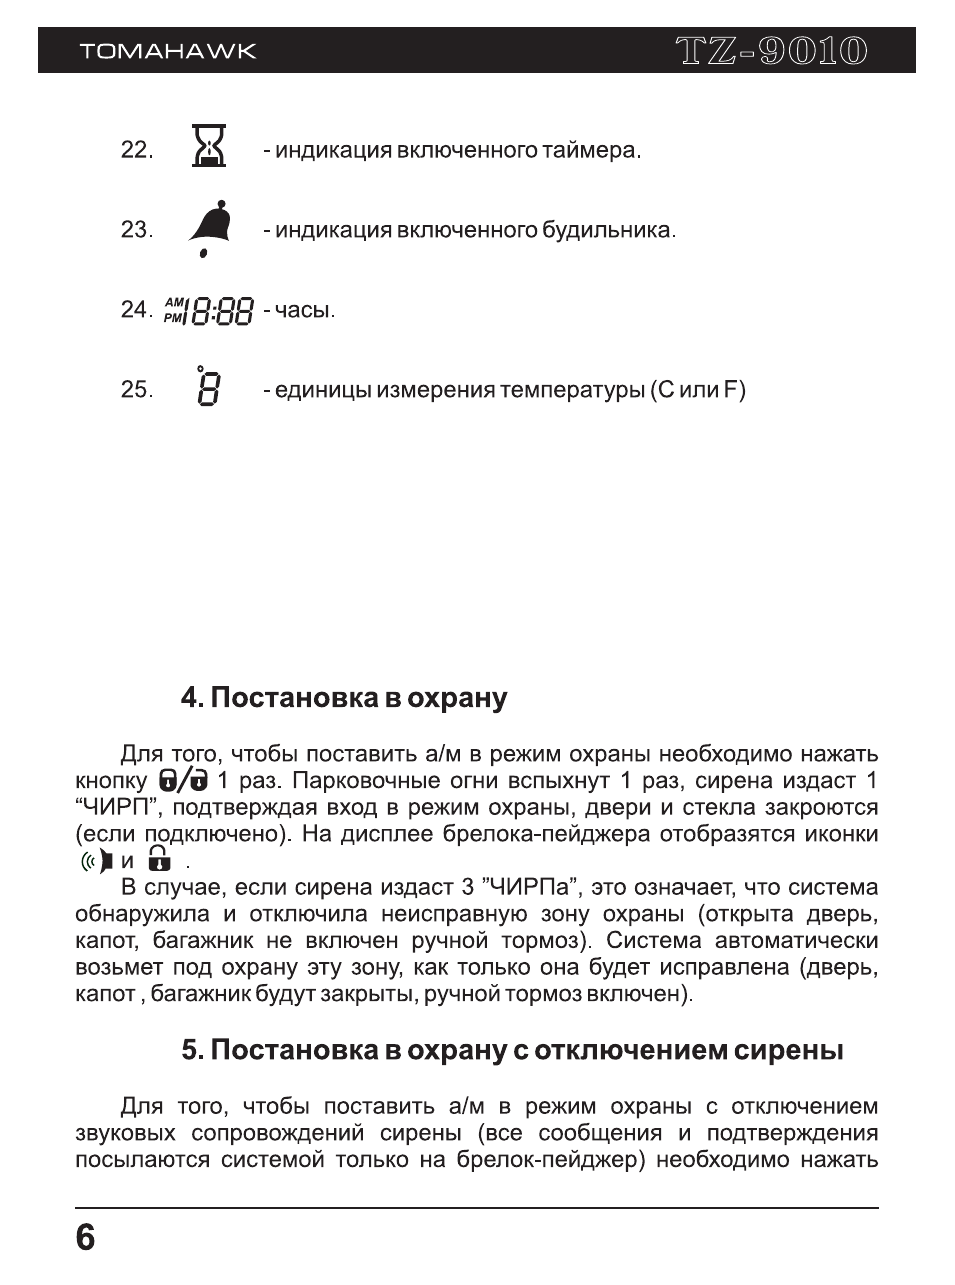 Инструкция по эксплуатации сигнализации томагавк (tomahawk) 9010, 9020 и 9030